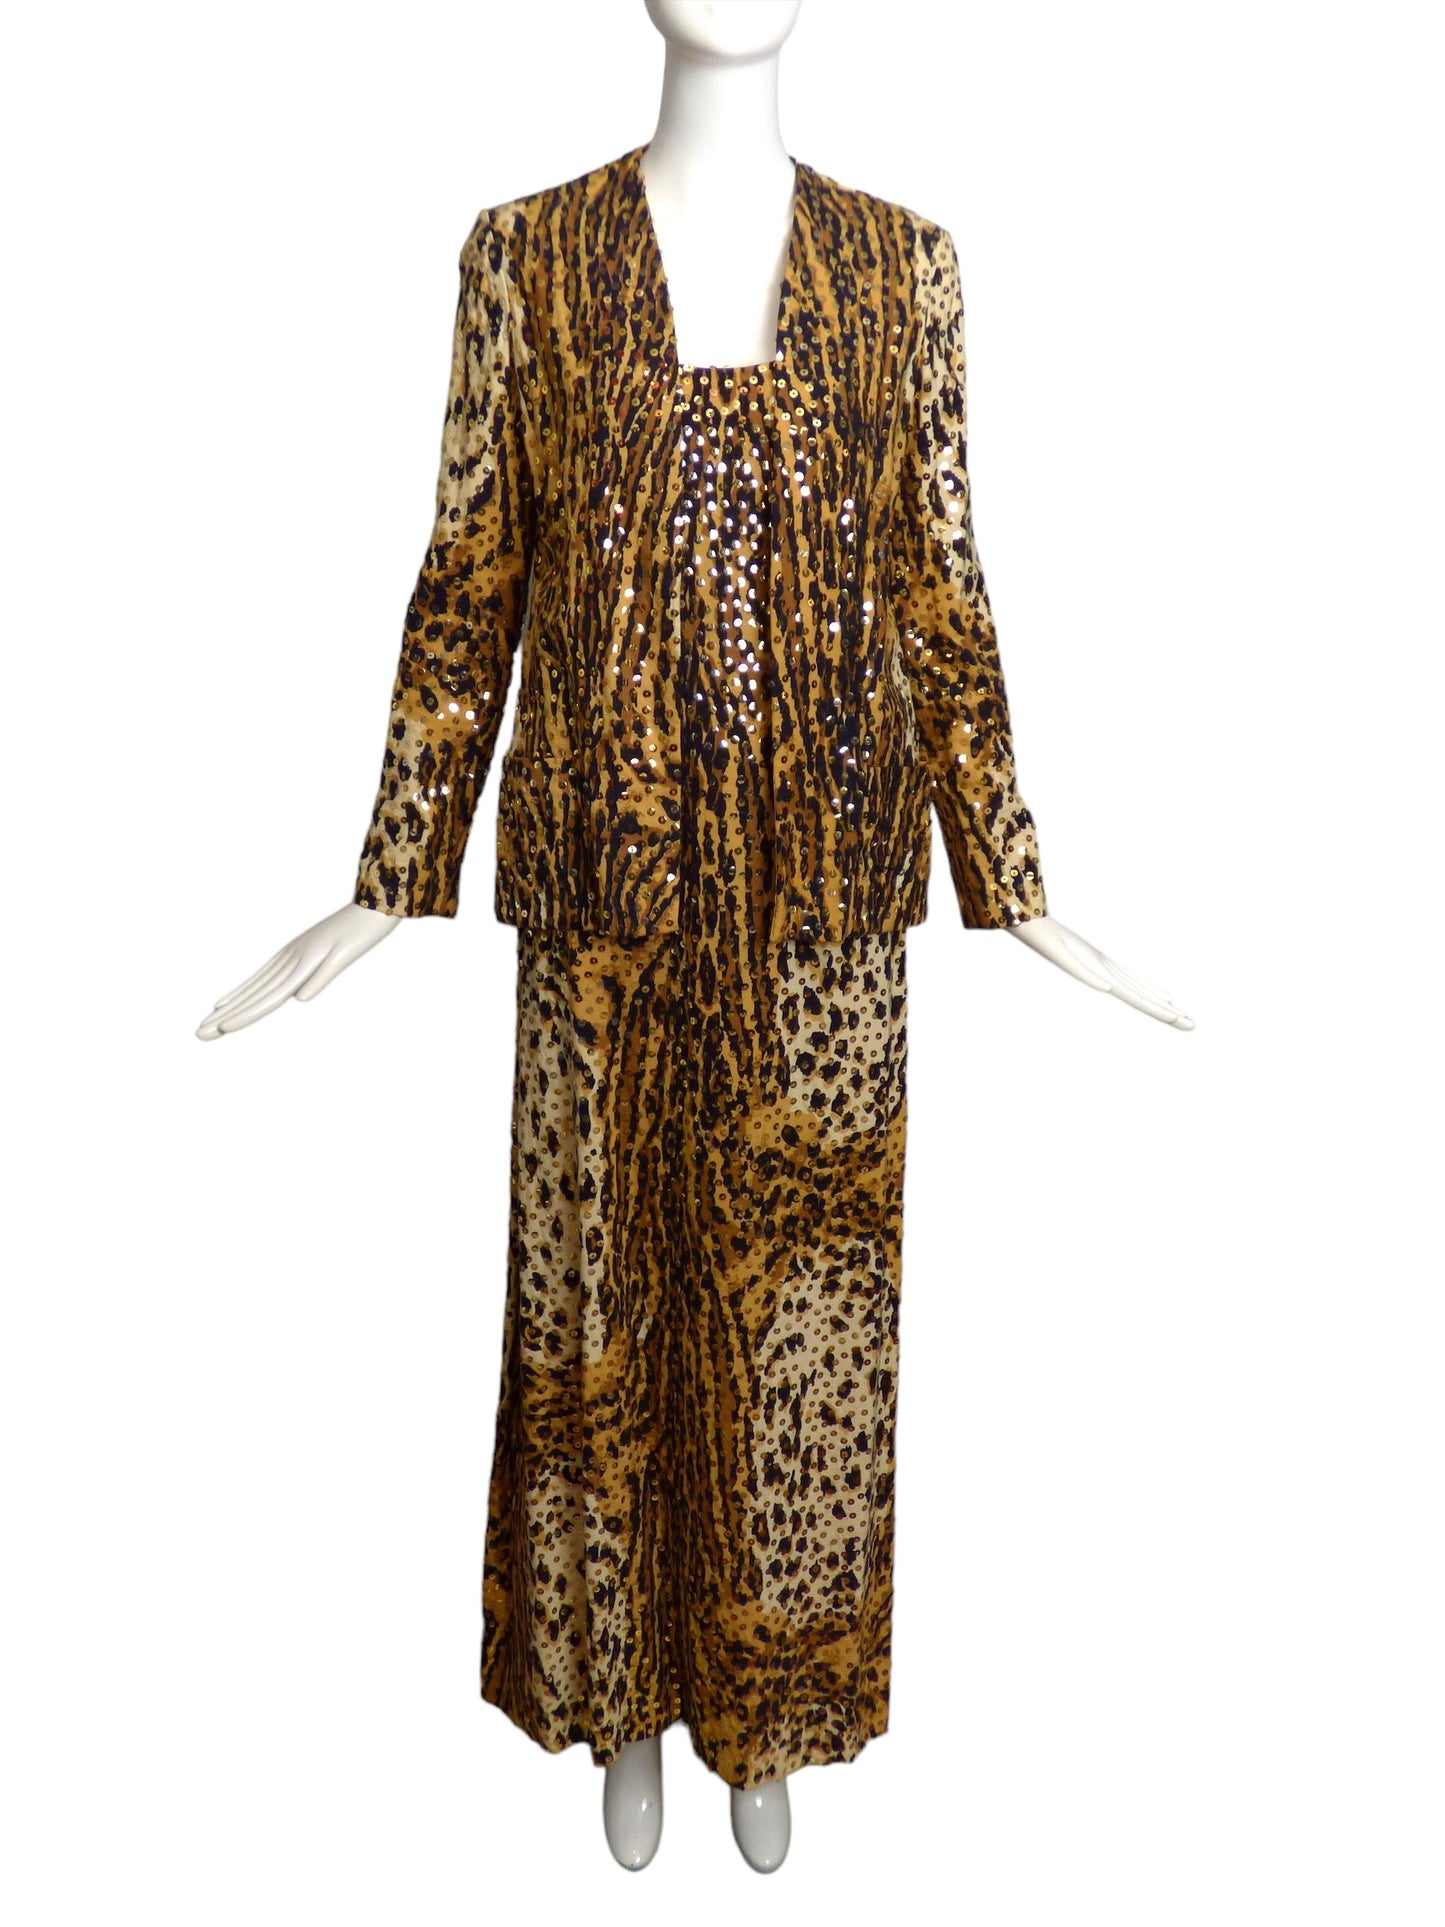 MOLLIE PARNIS- 1970s 2pc Animal Print Sequin Dress, Size 4